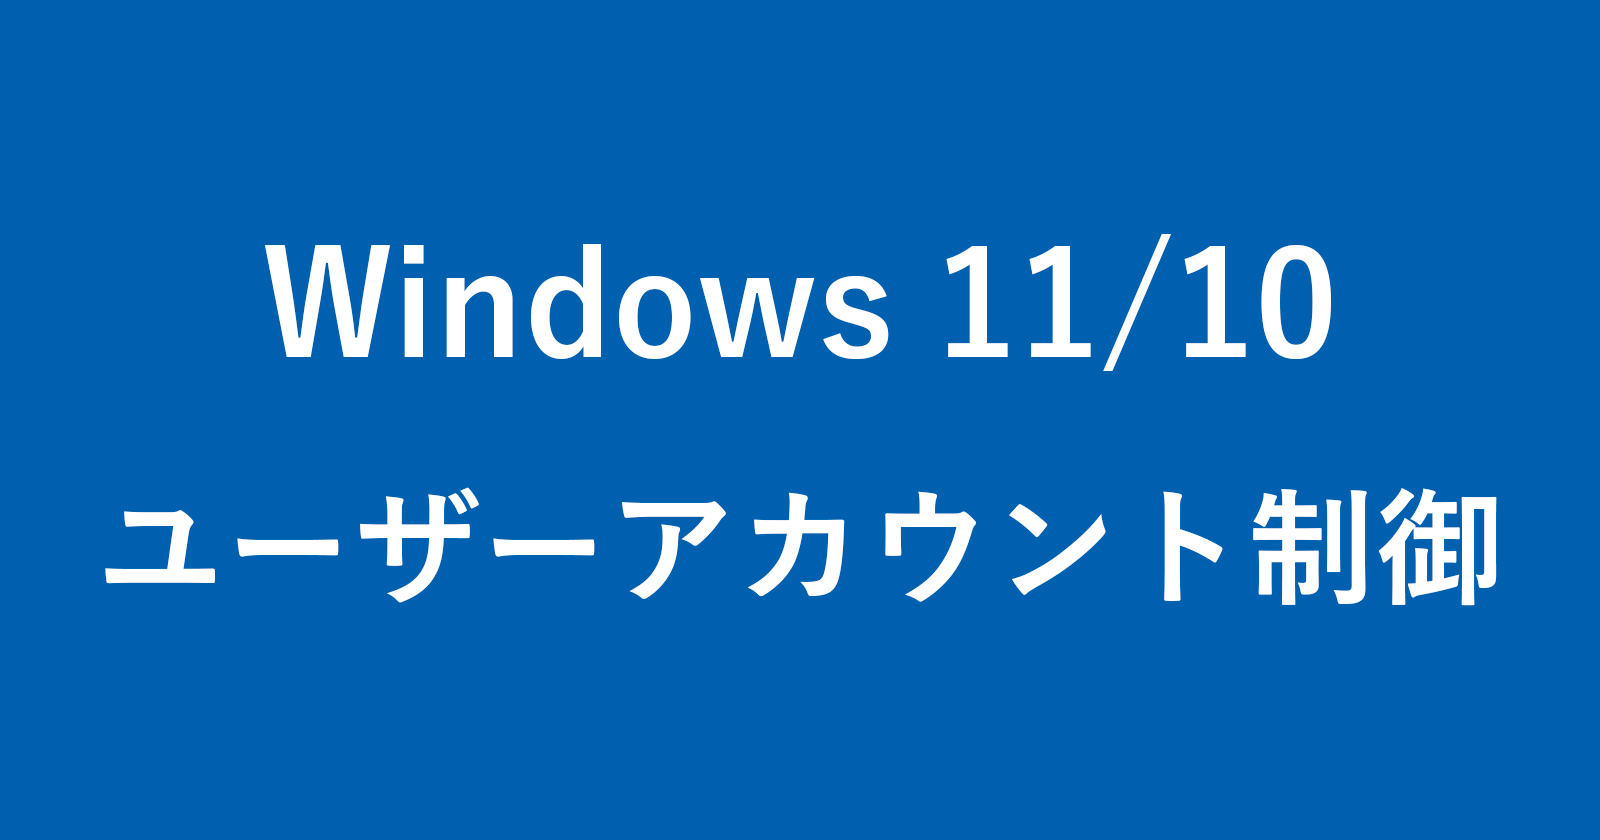 windows 11 10 uac